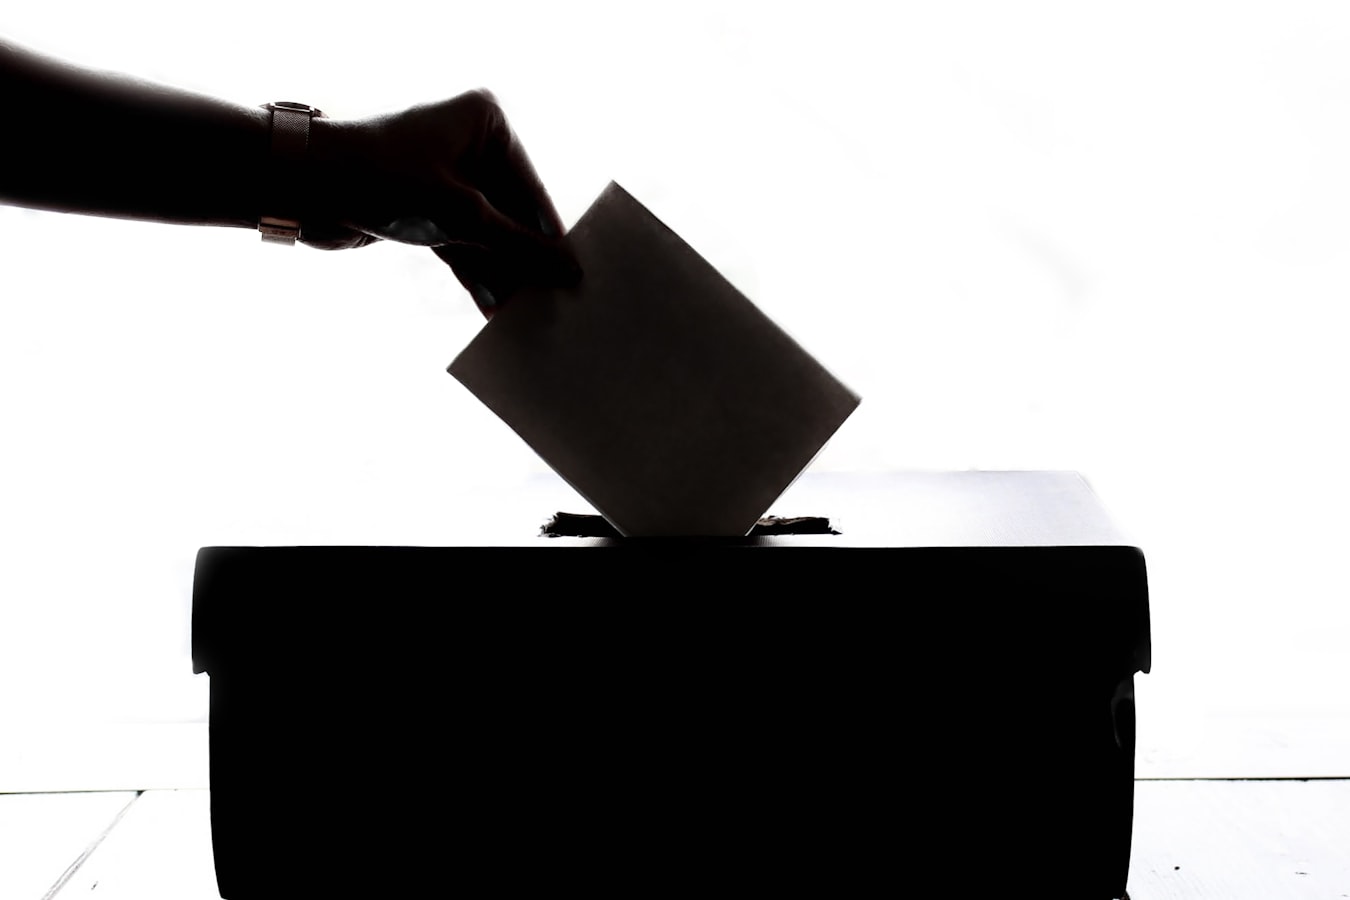 A hand putting a ballot in a box.